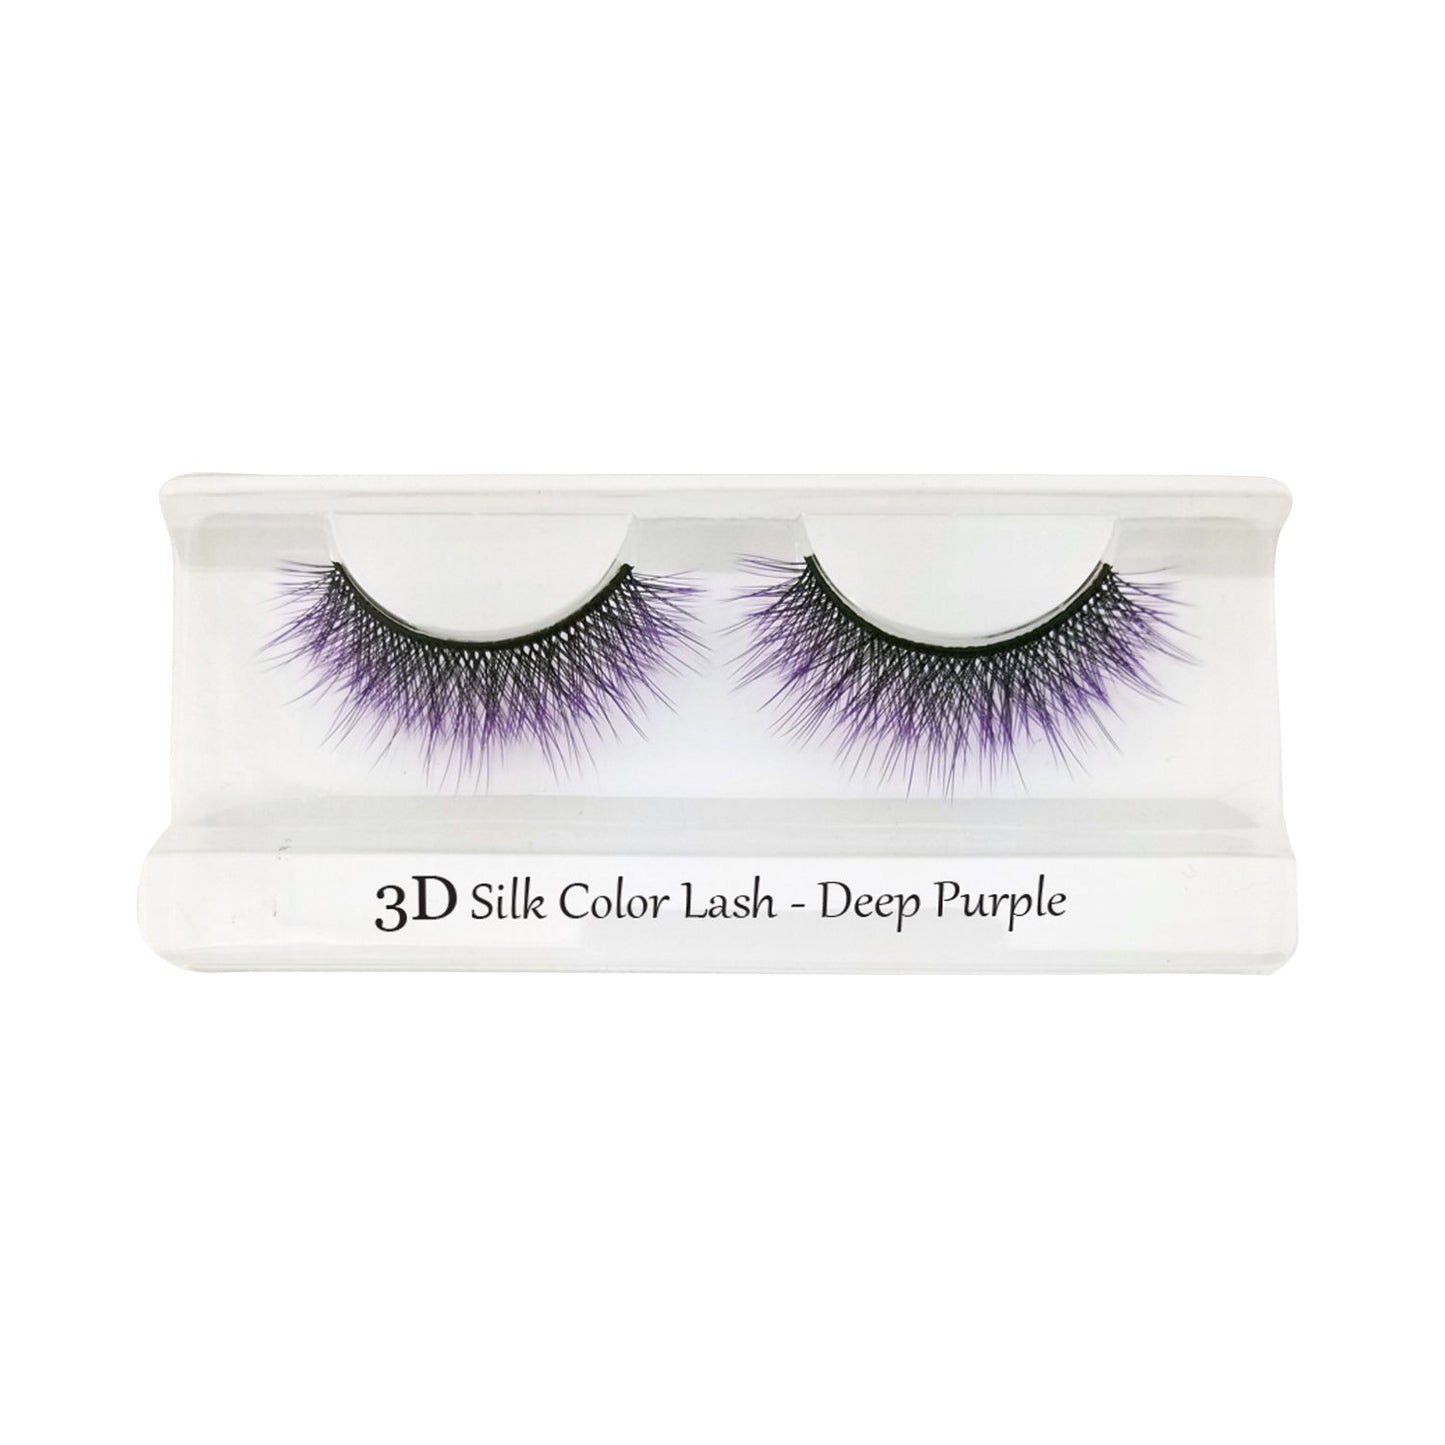 Deep Purple - 3D Silk Color Lash